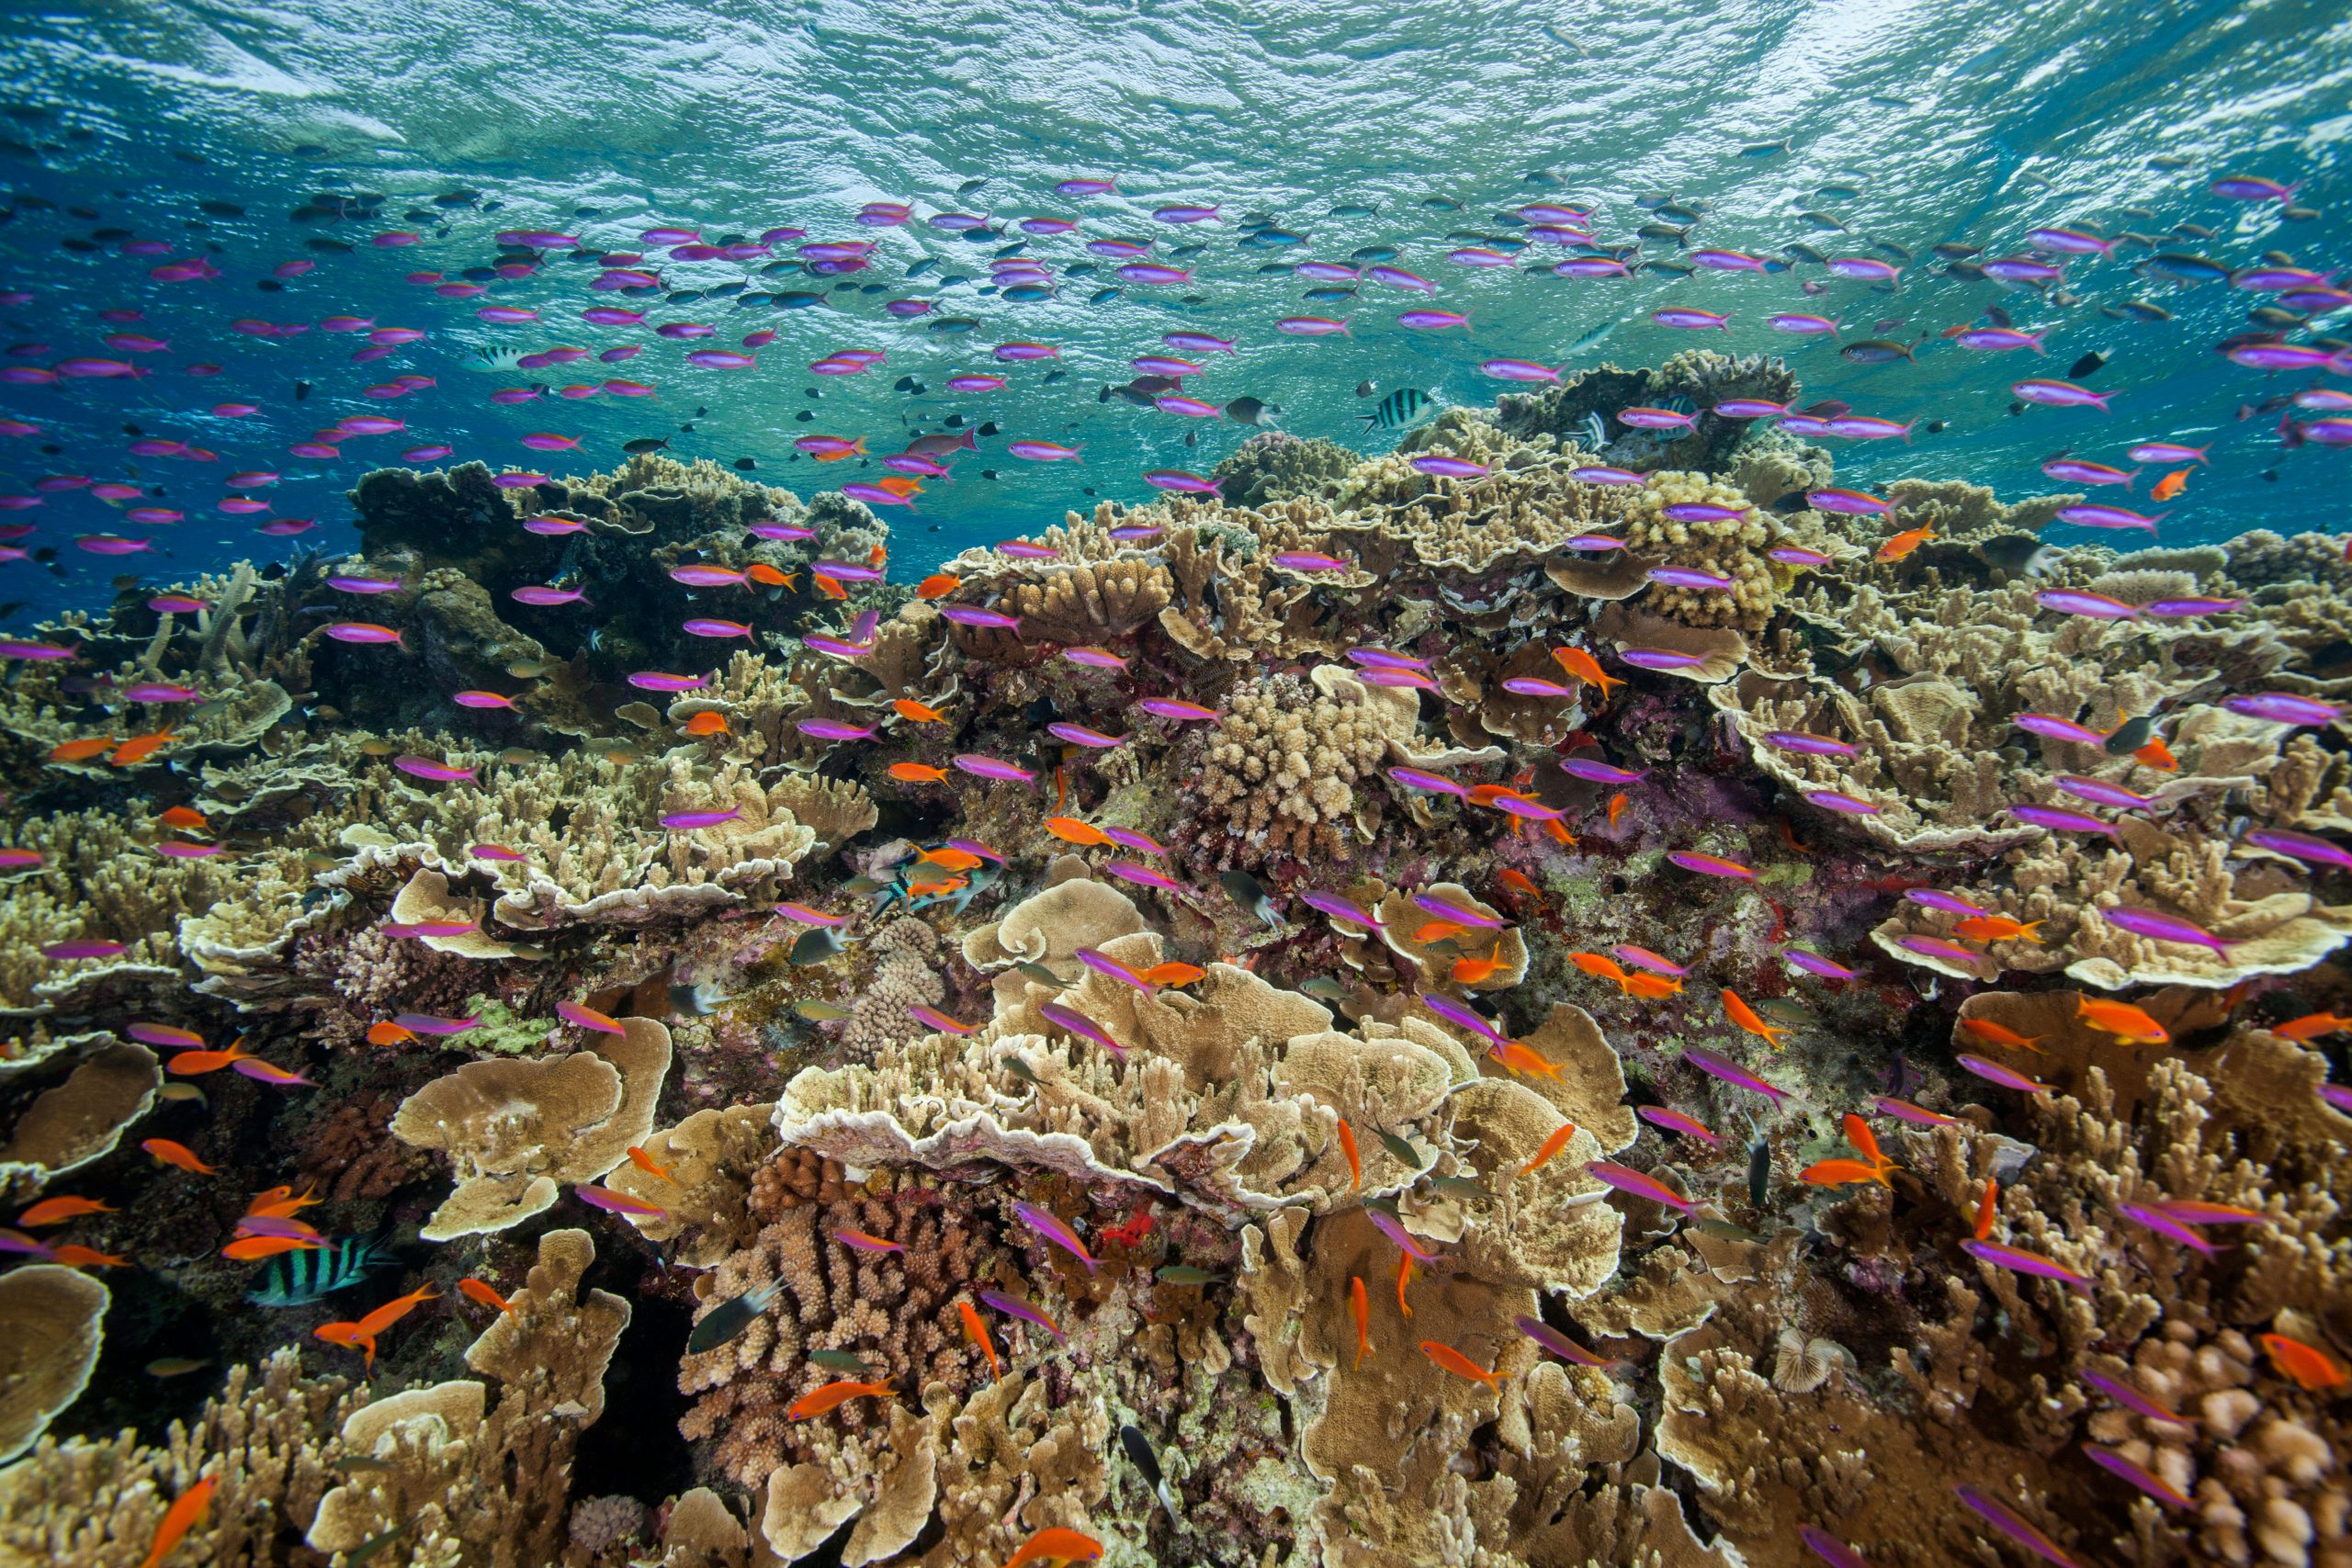 Australia’s Great Barrier Reef threatened by severe marine heatwaves: Report